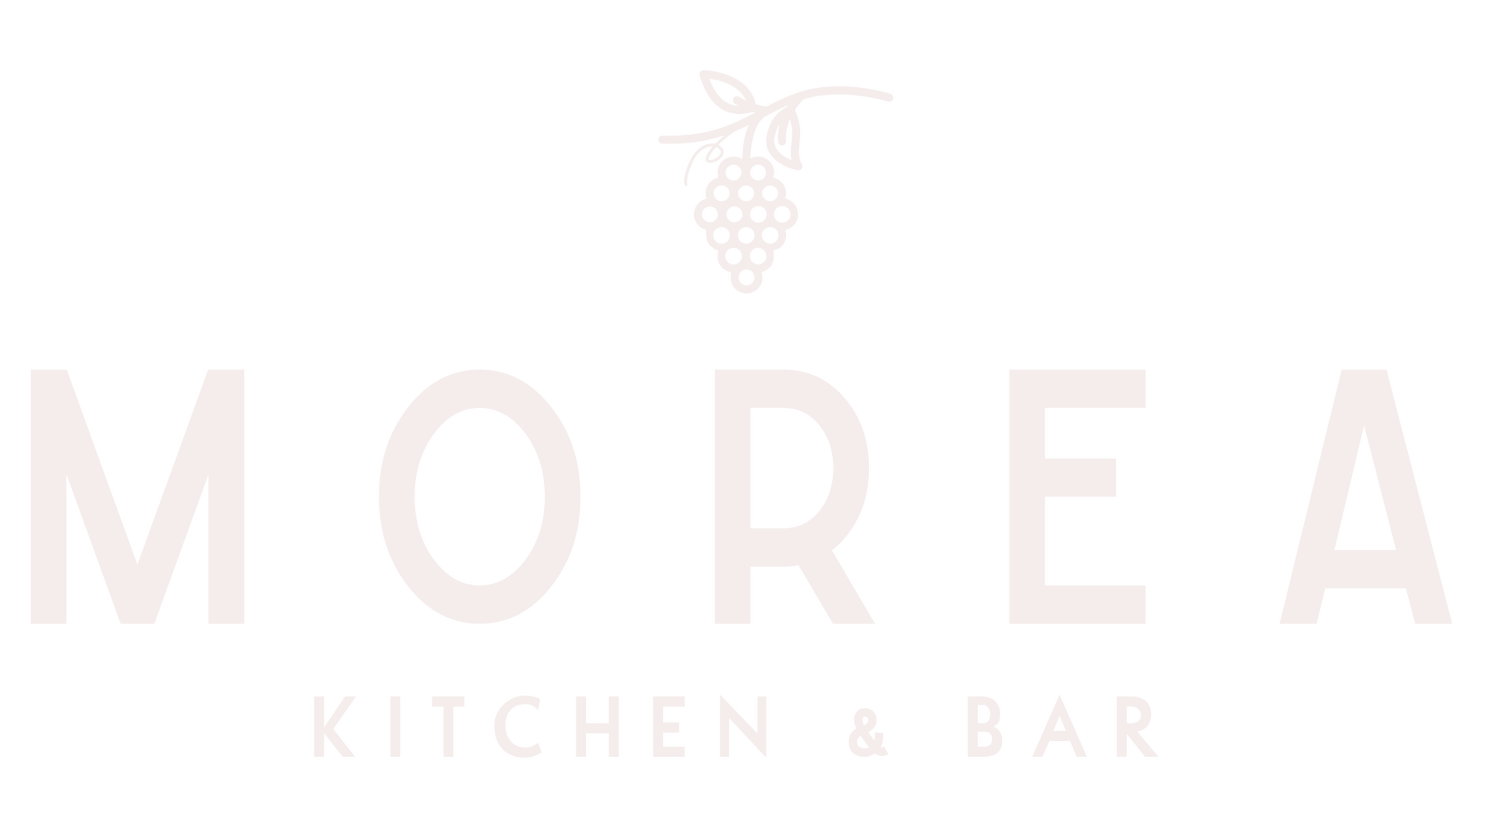 Morea Restaurant